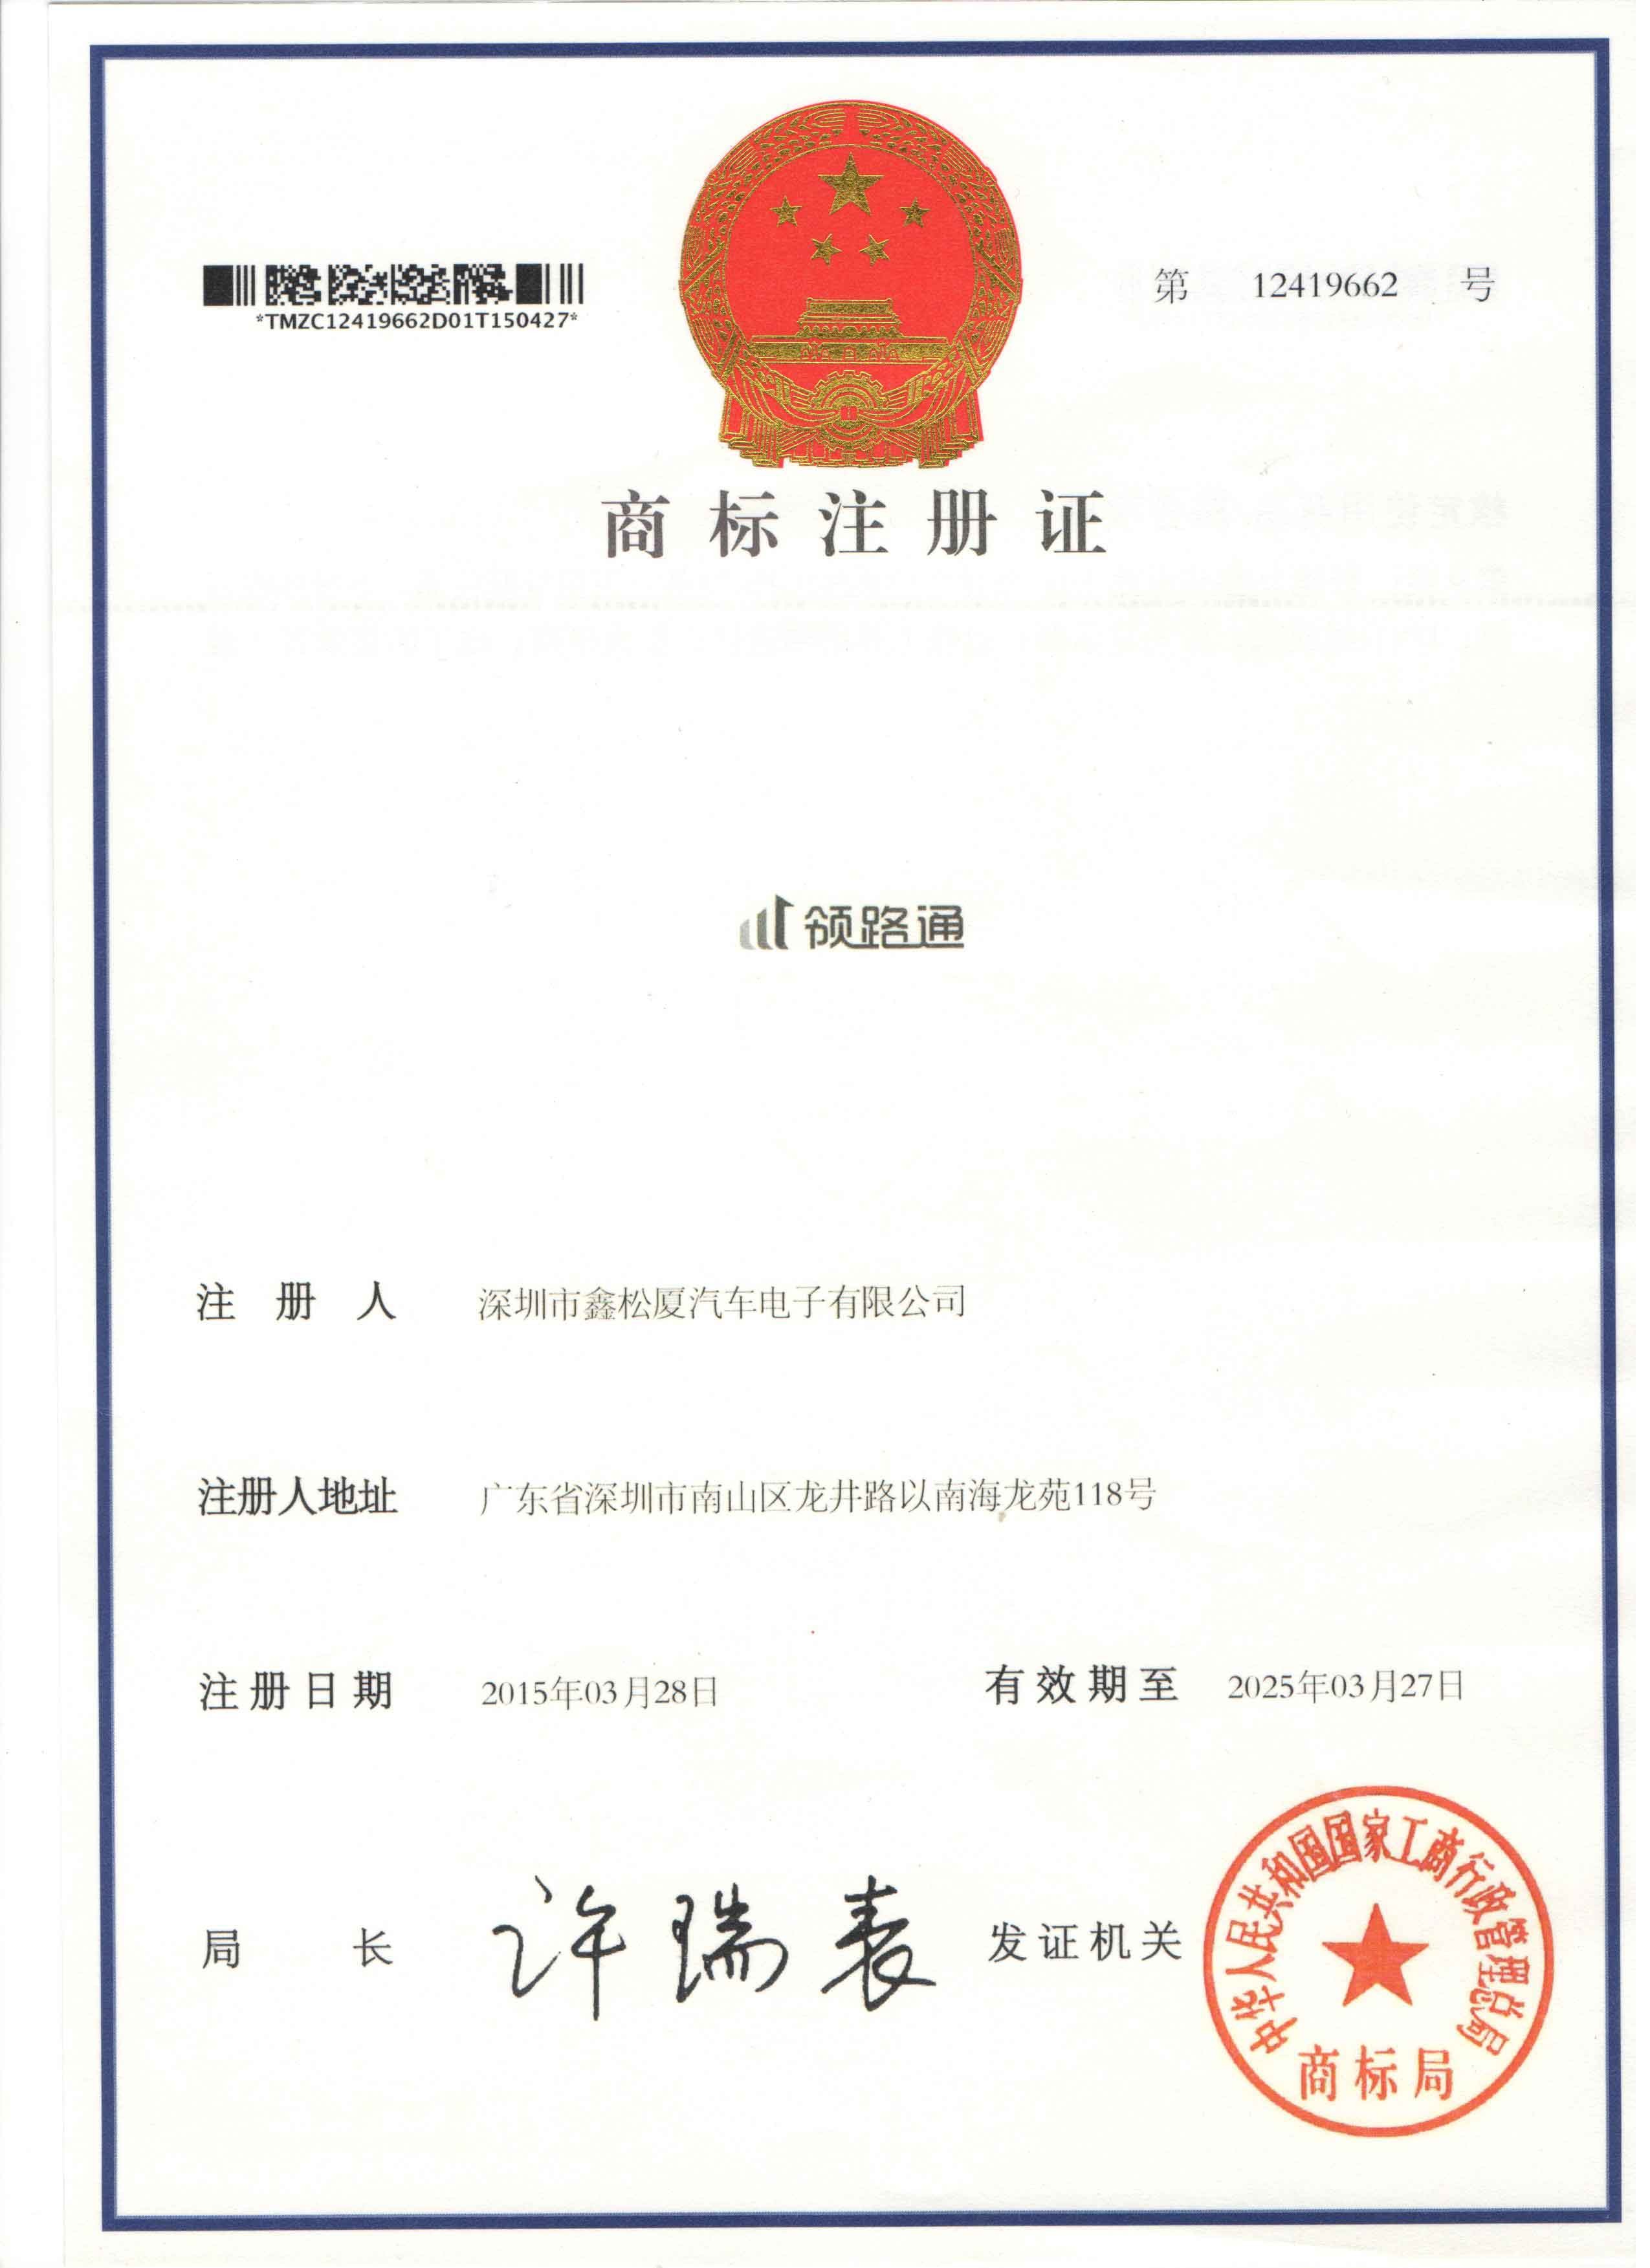 Shenzhen Xinsongxia Automobile Electron Co.,Ltd Certifications